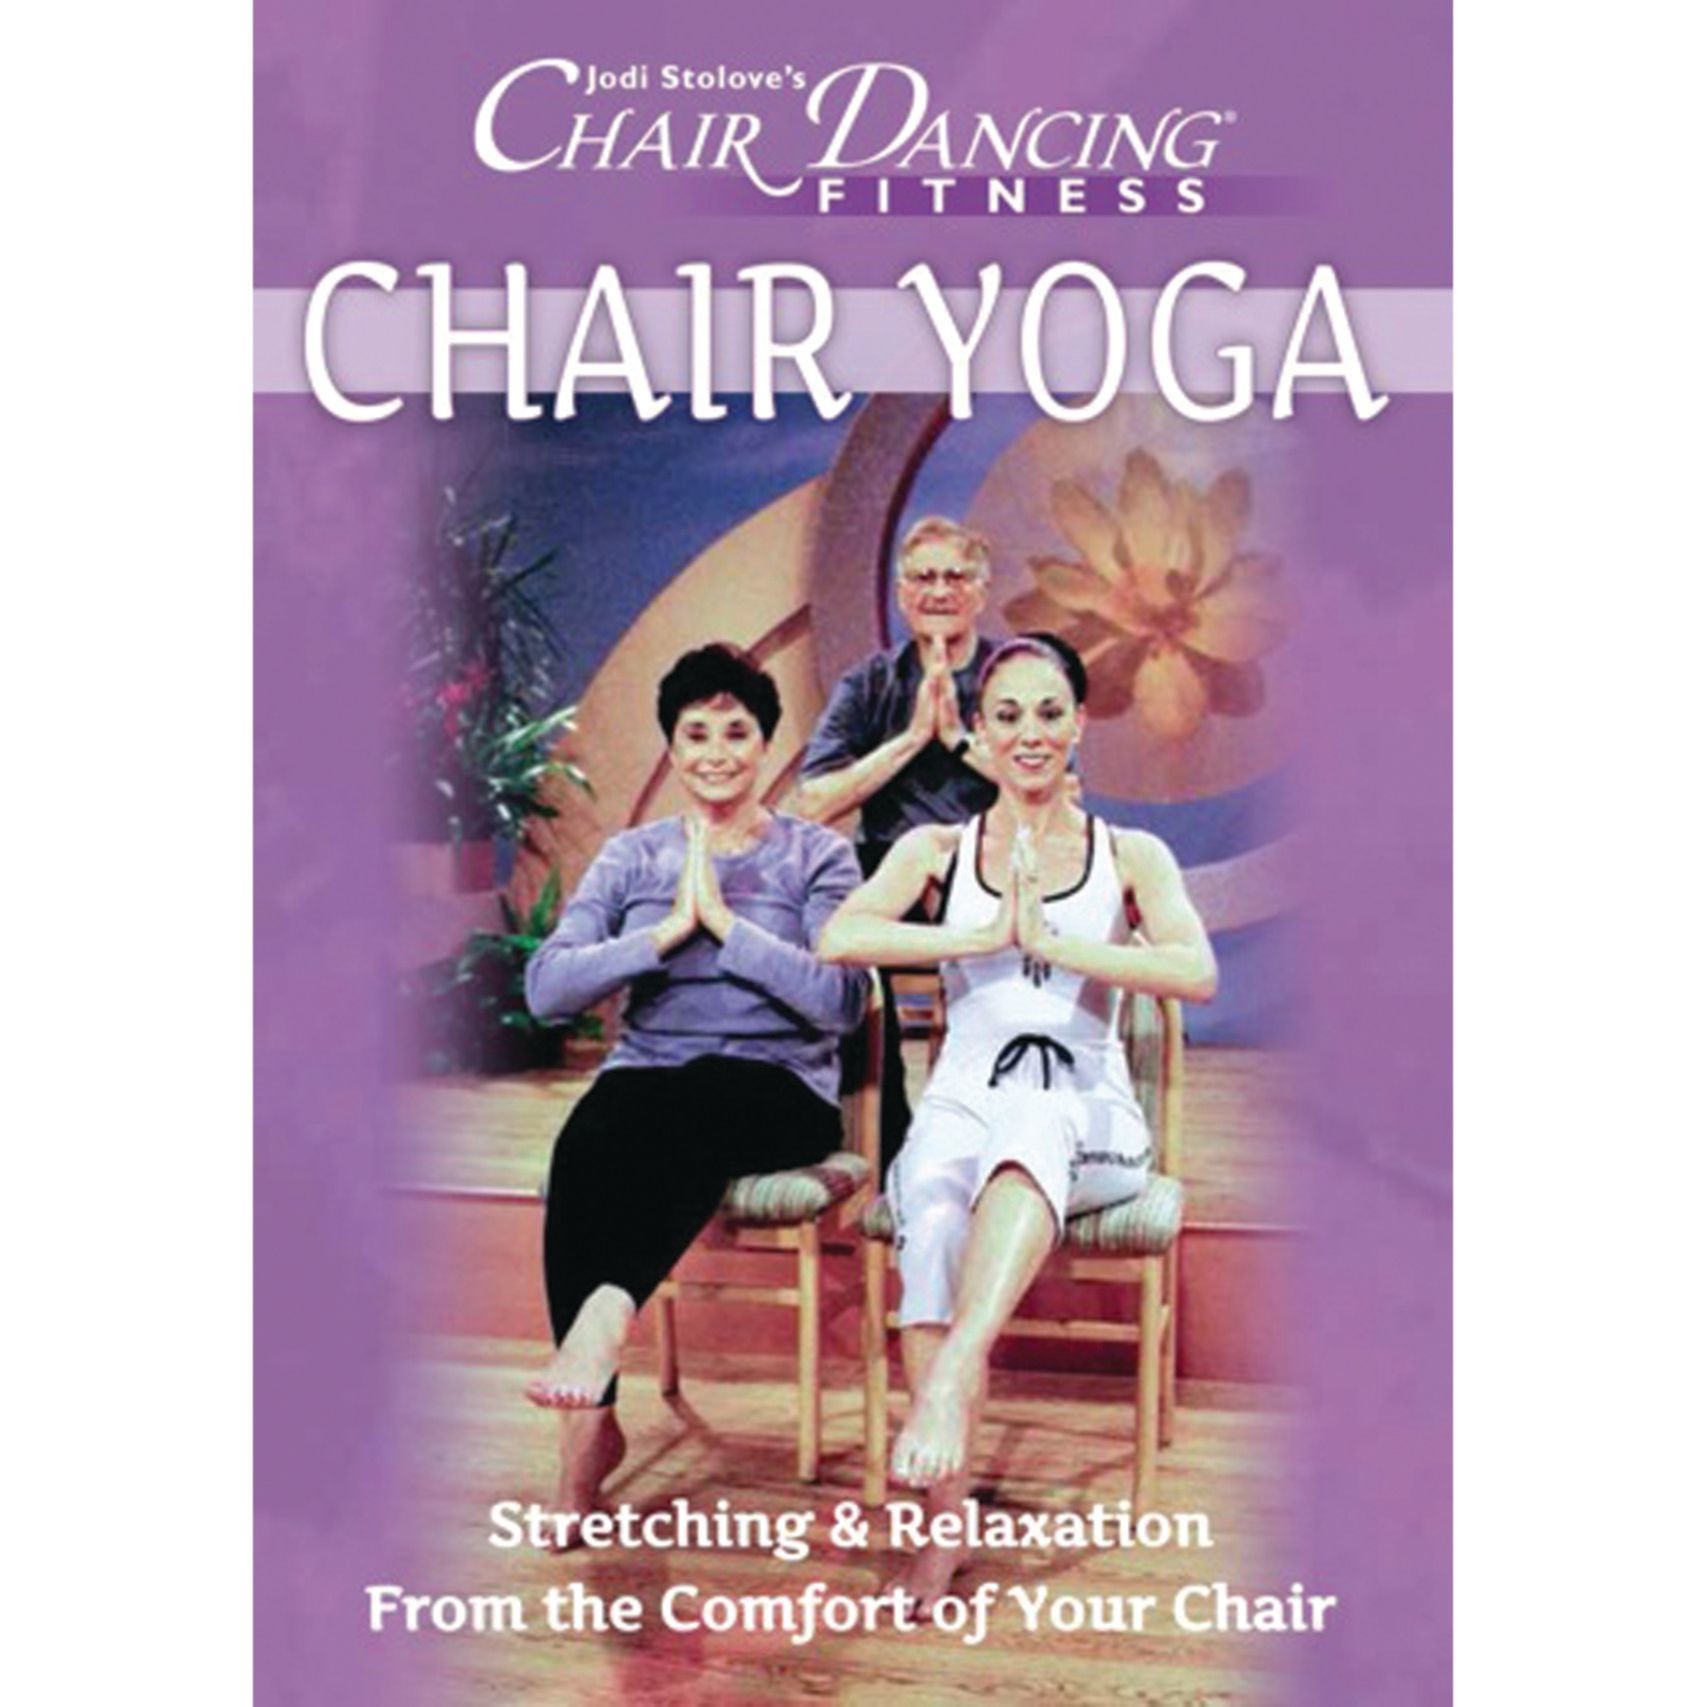 Chair Yoga by Chair Aerobics for Everyone DVD